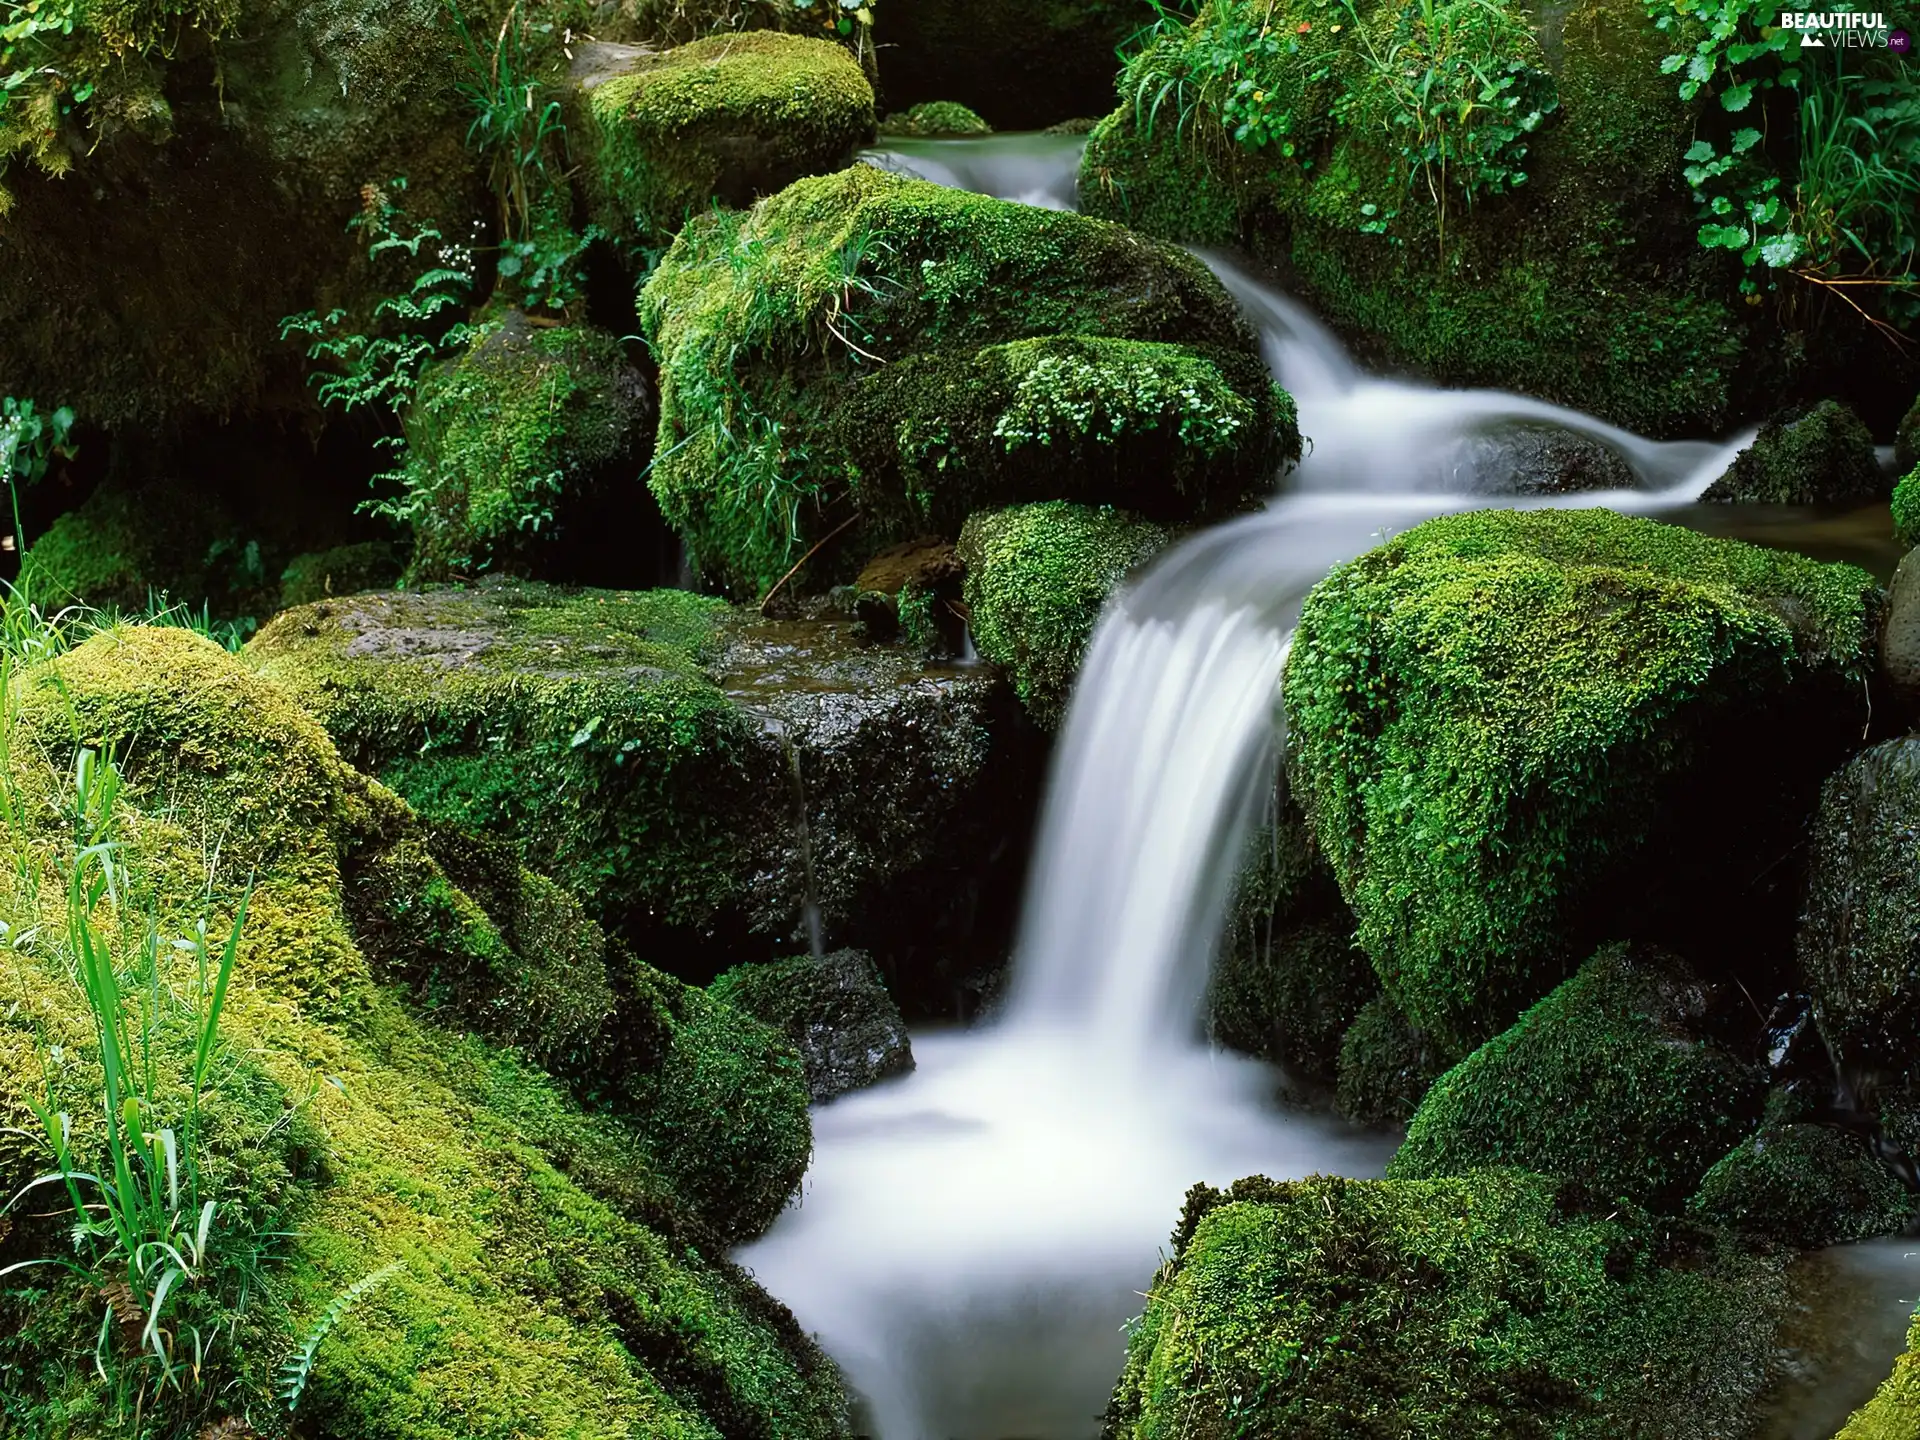 Stones, waterfall, mossy